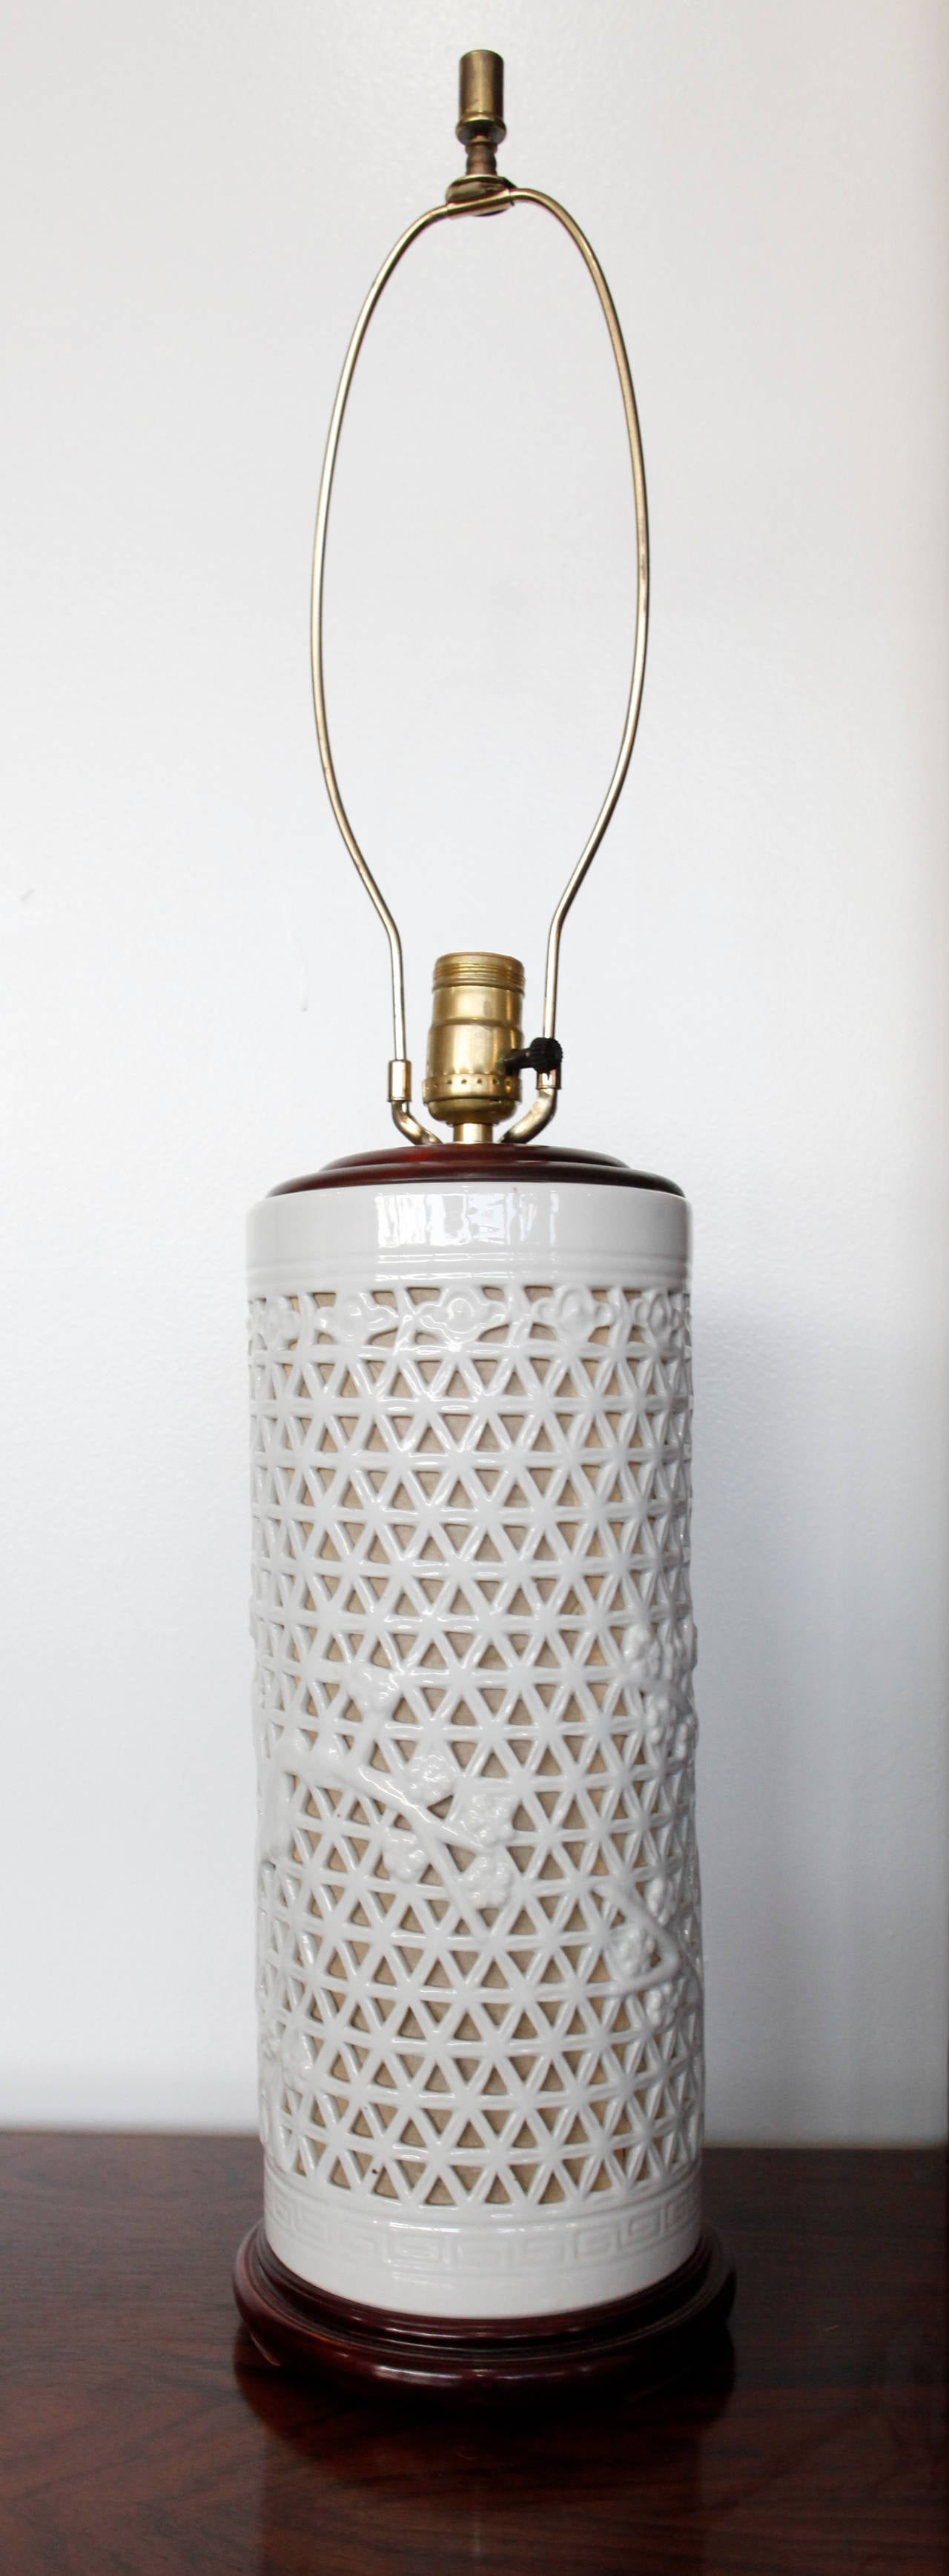 Pierce cut ceramic Blanc de Chine table lamps with cherry tree motif.